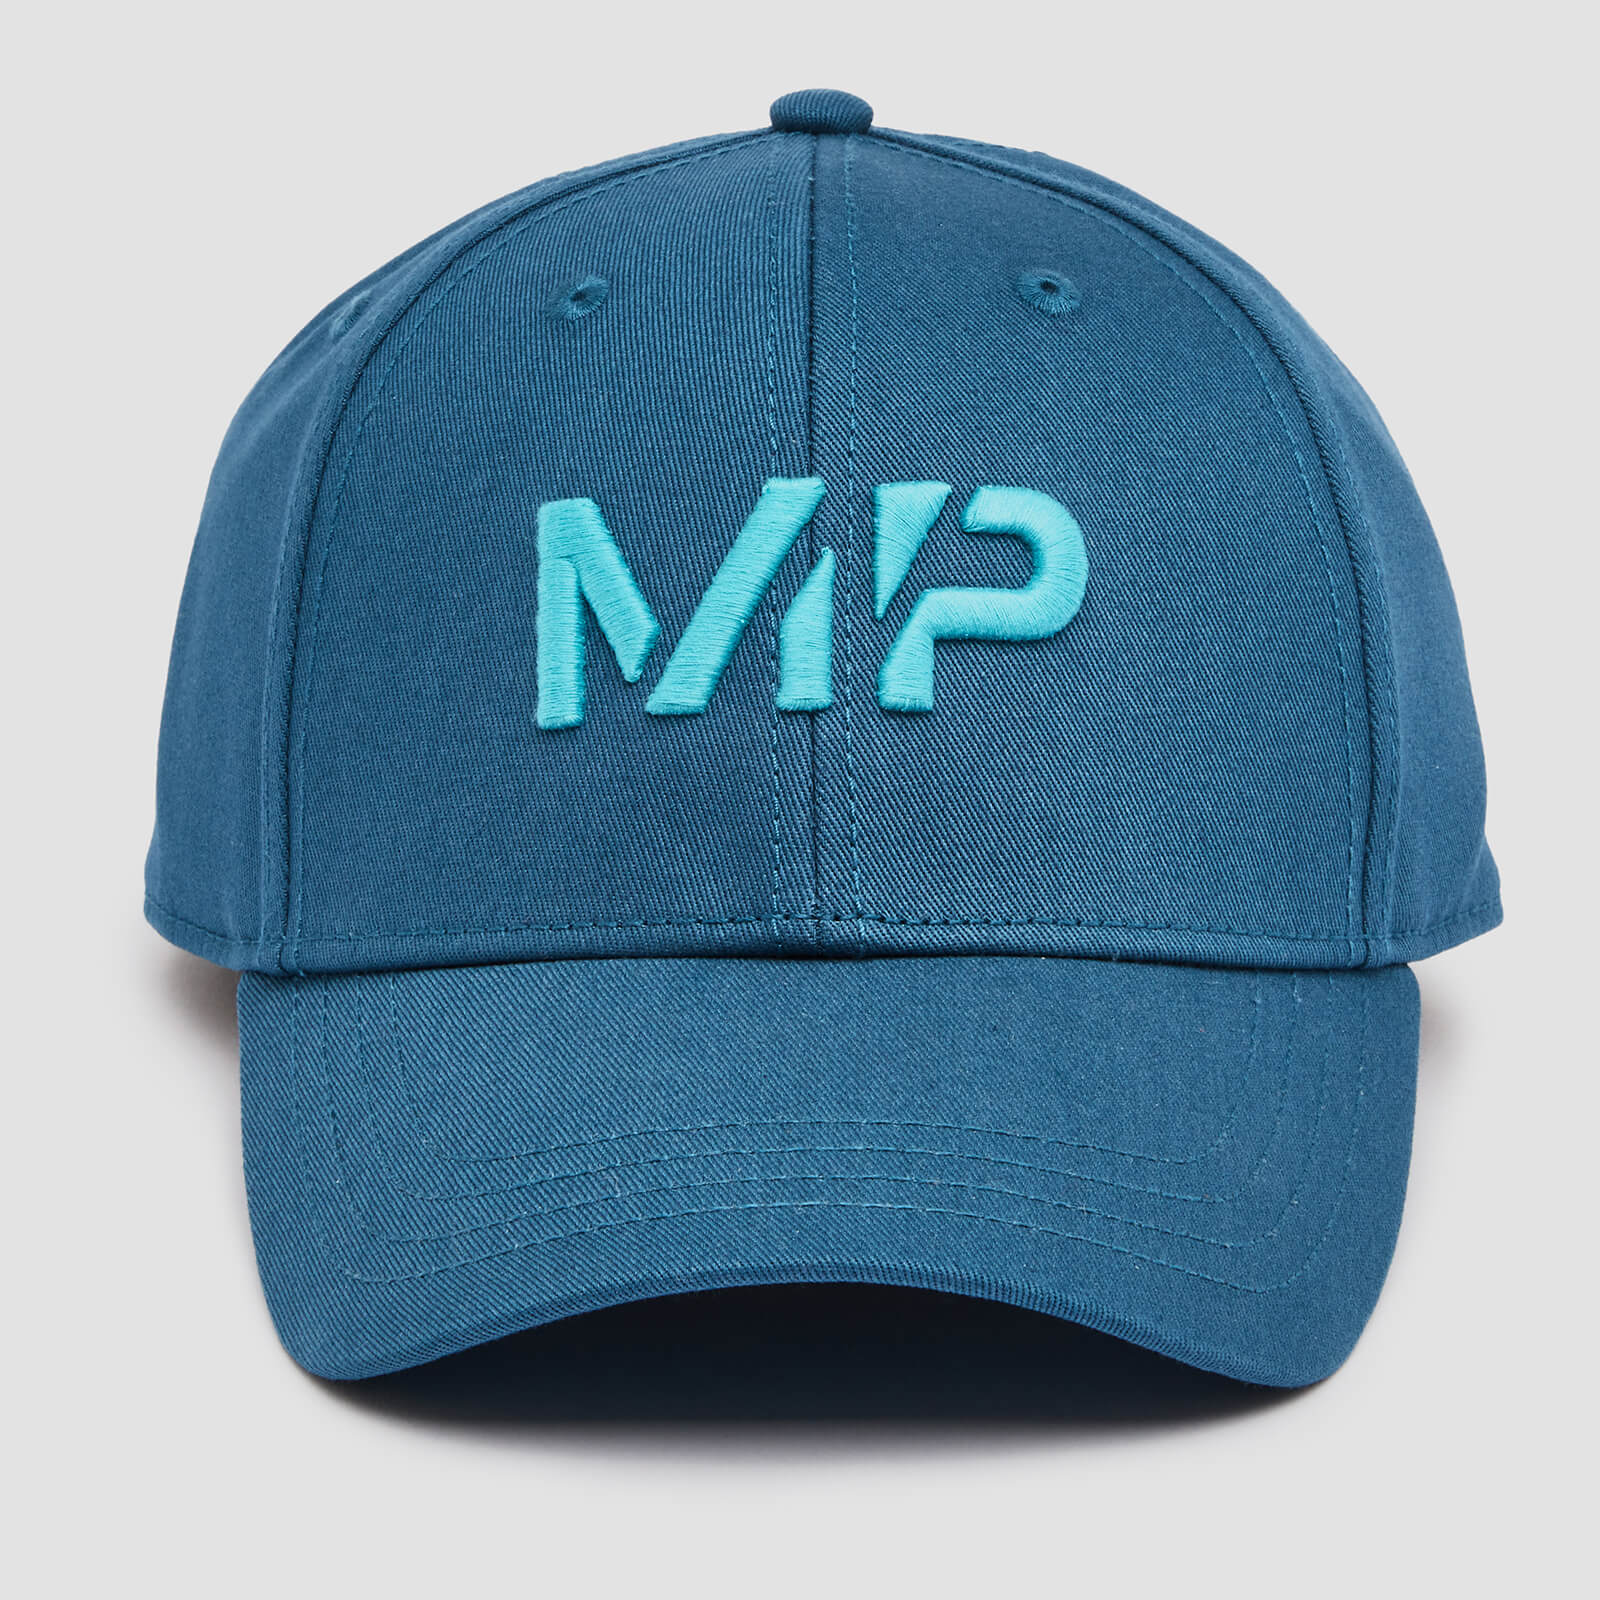 MP Limited Edition Impact Baseball Cap - Teal